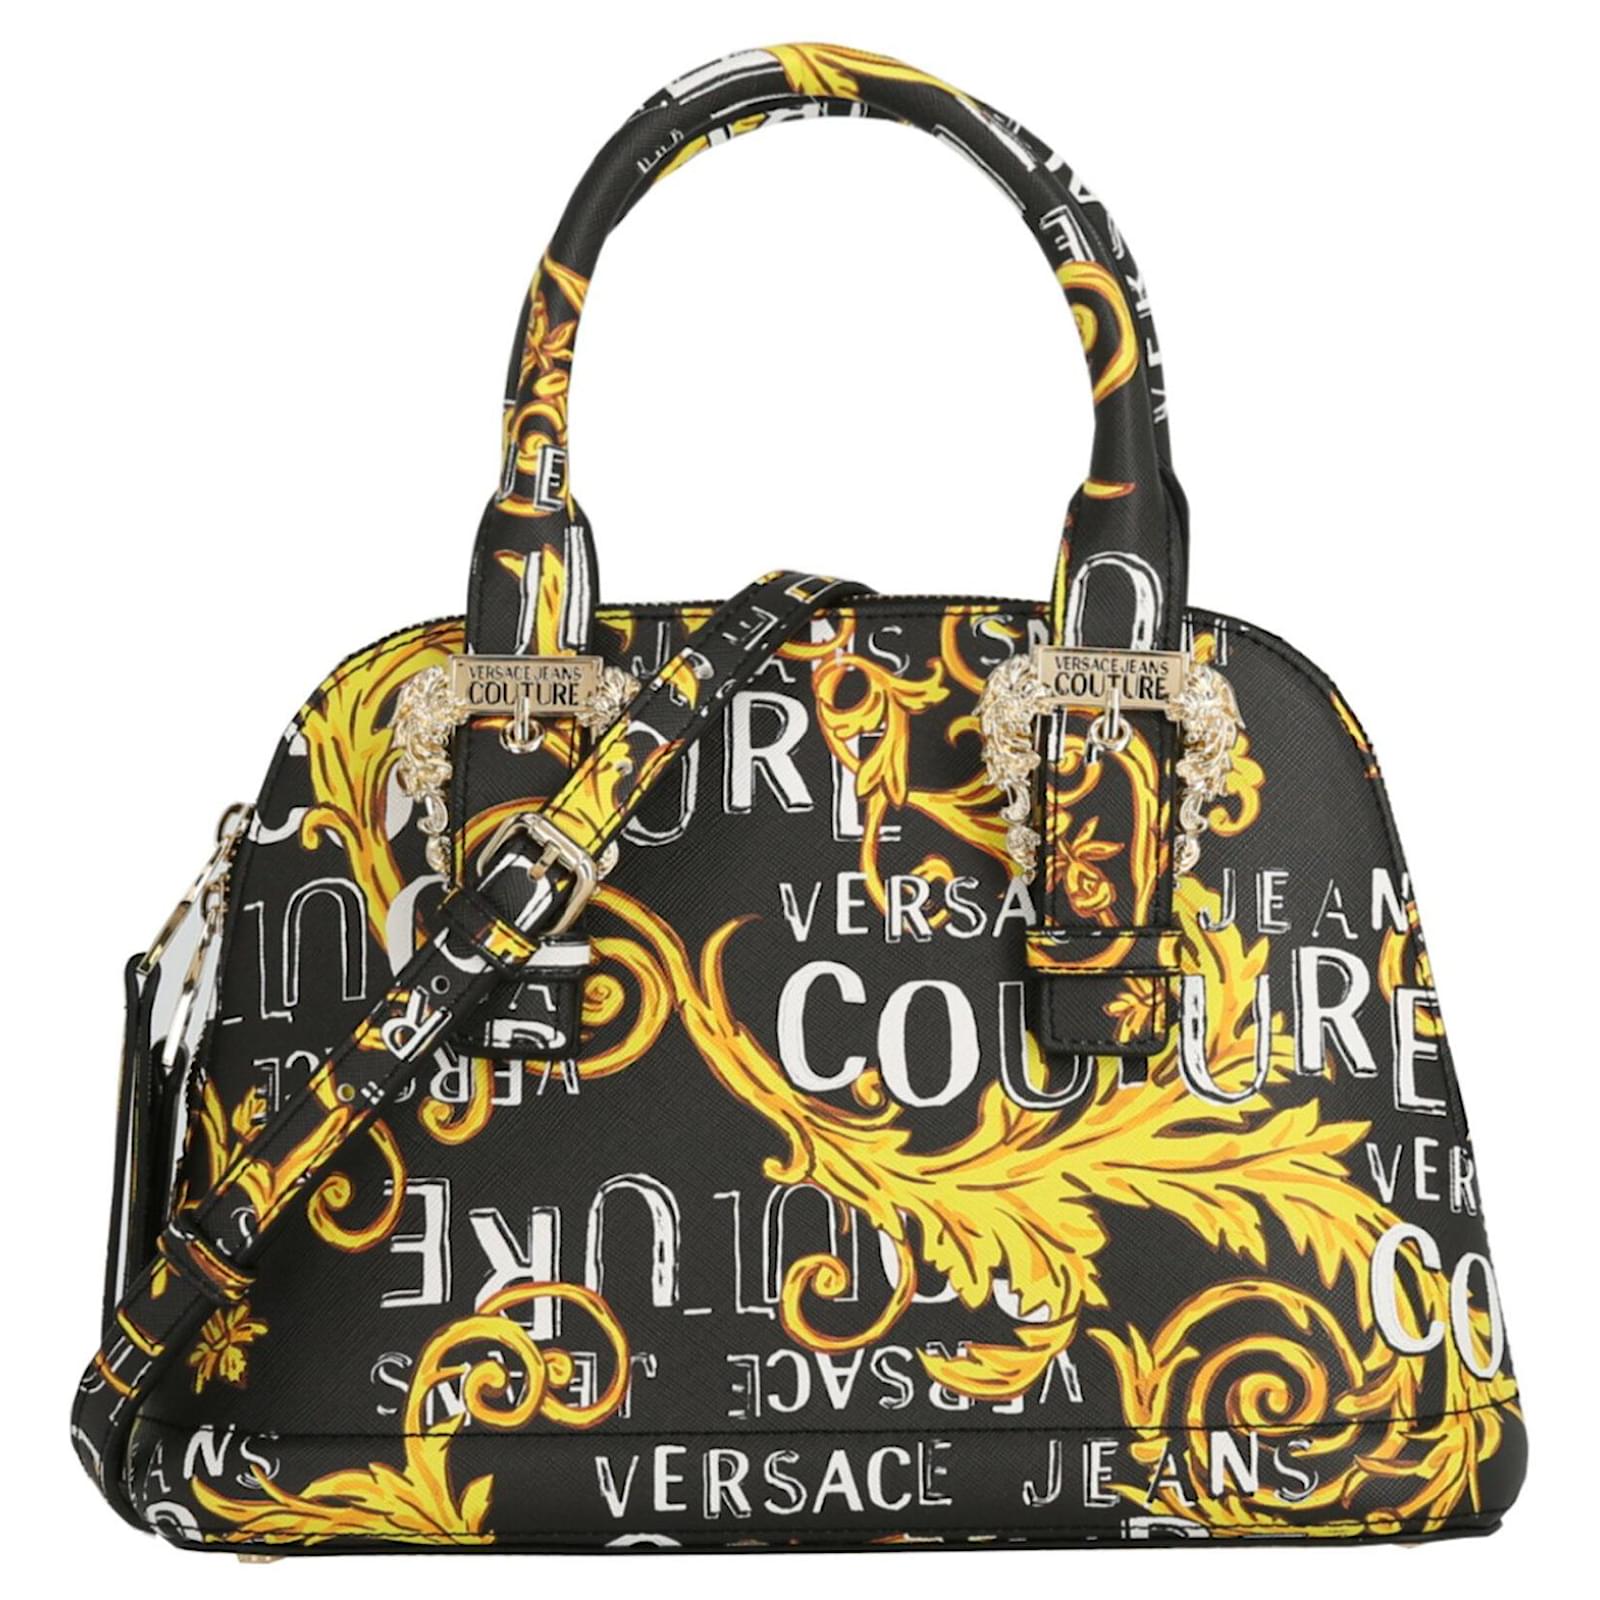 Versace jeans couture shoulder bag